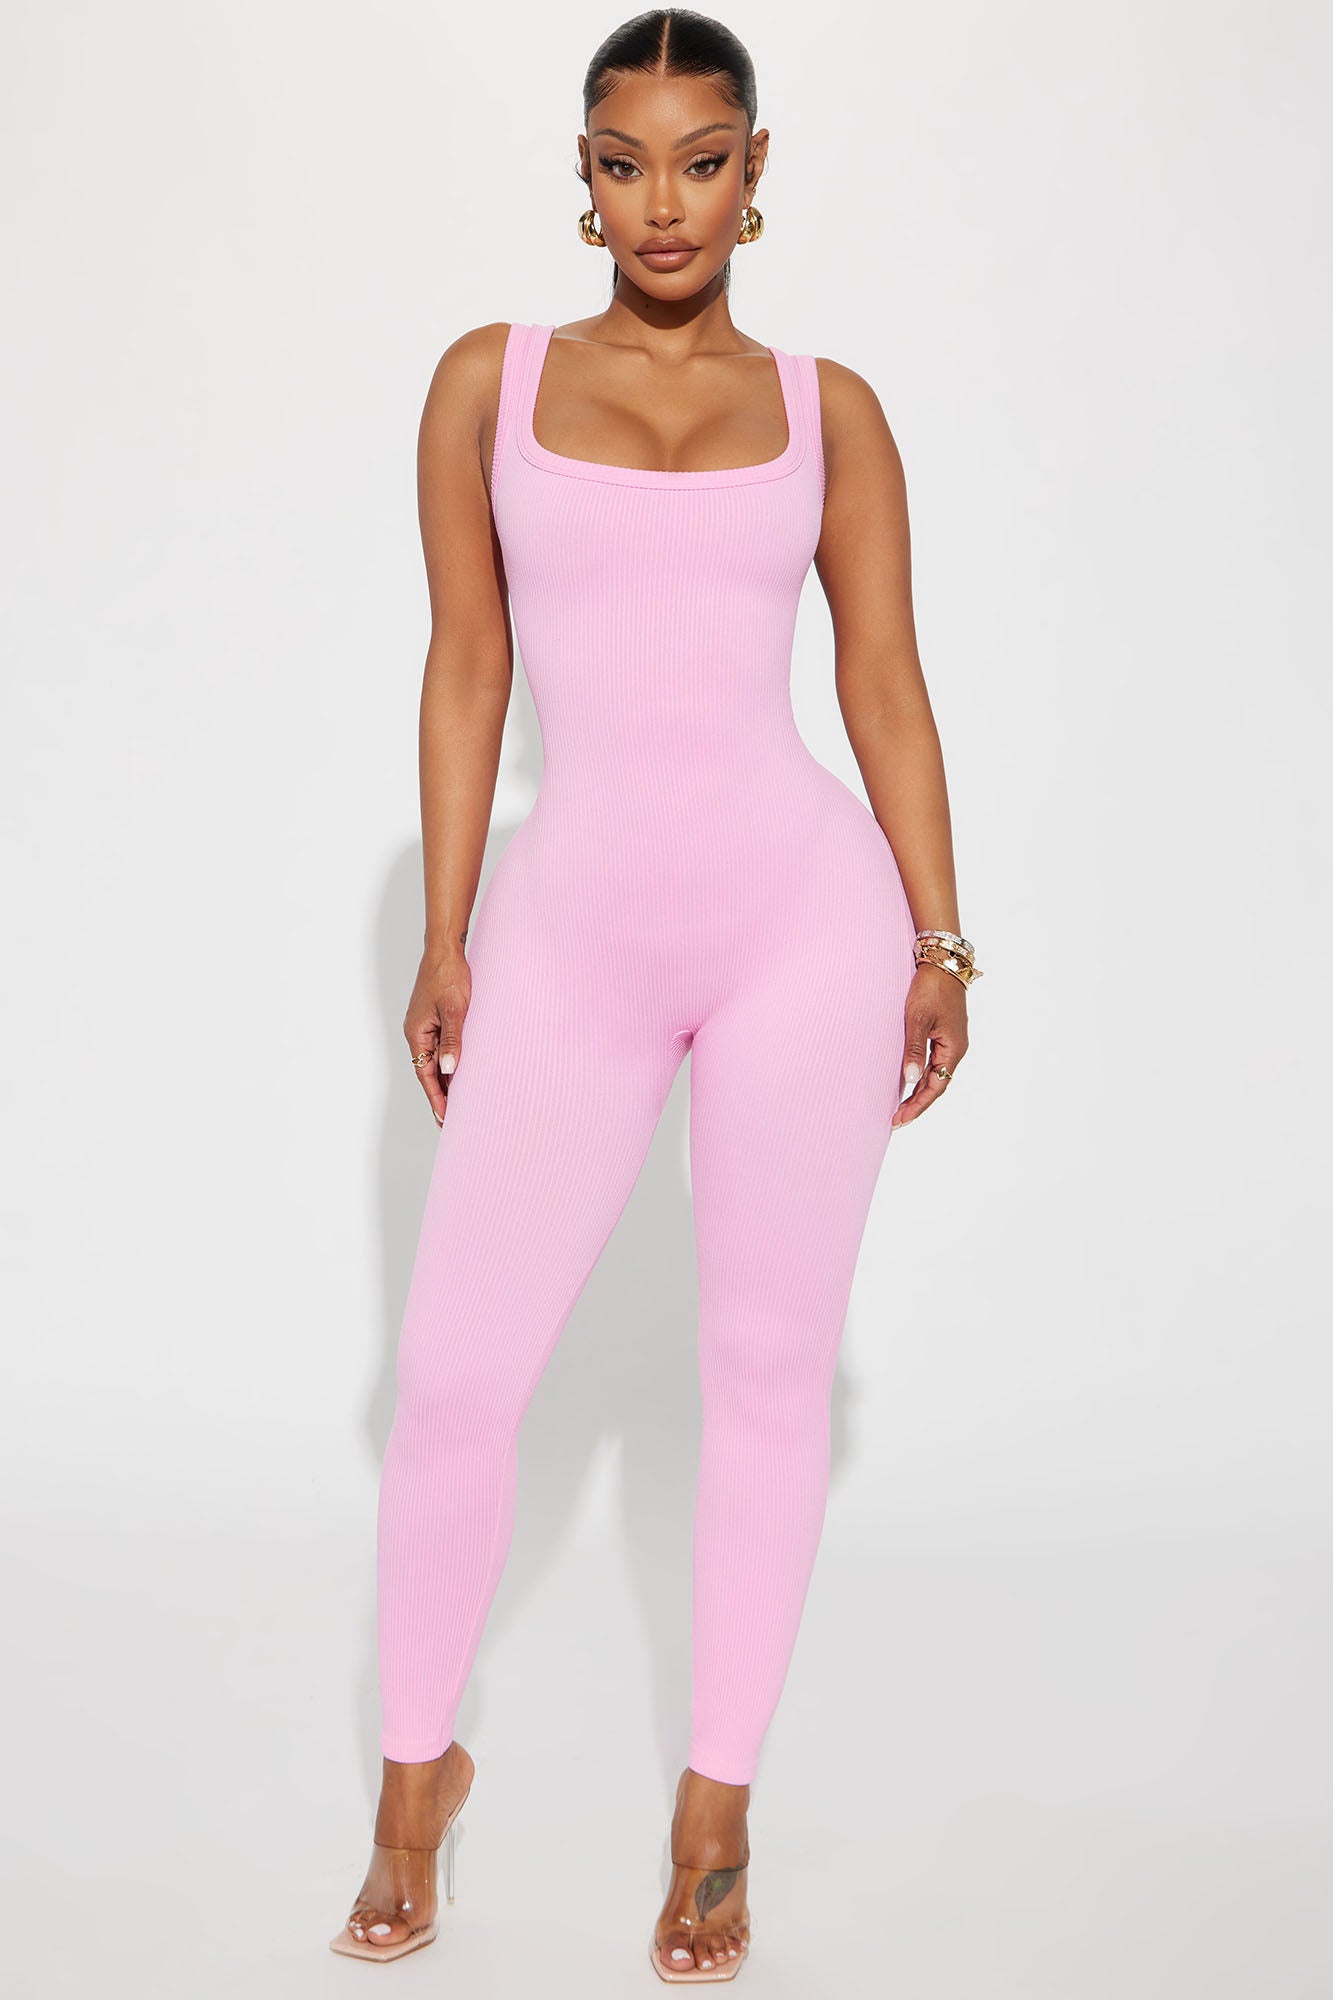 Find My Way Seamless Jumpsuit - Pink, Fashion Nova, Jumpsuits